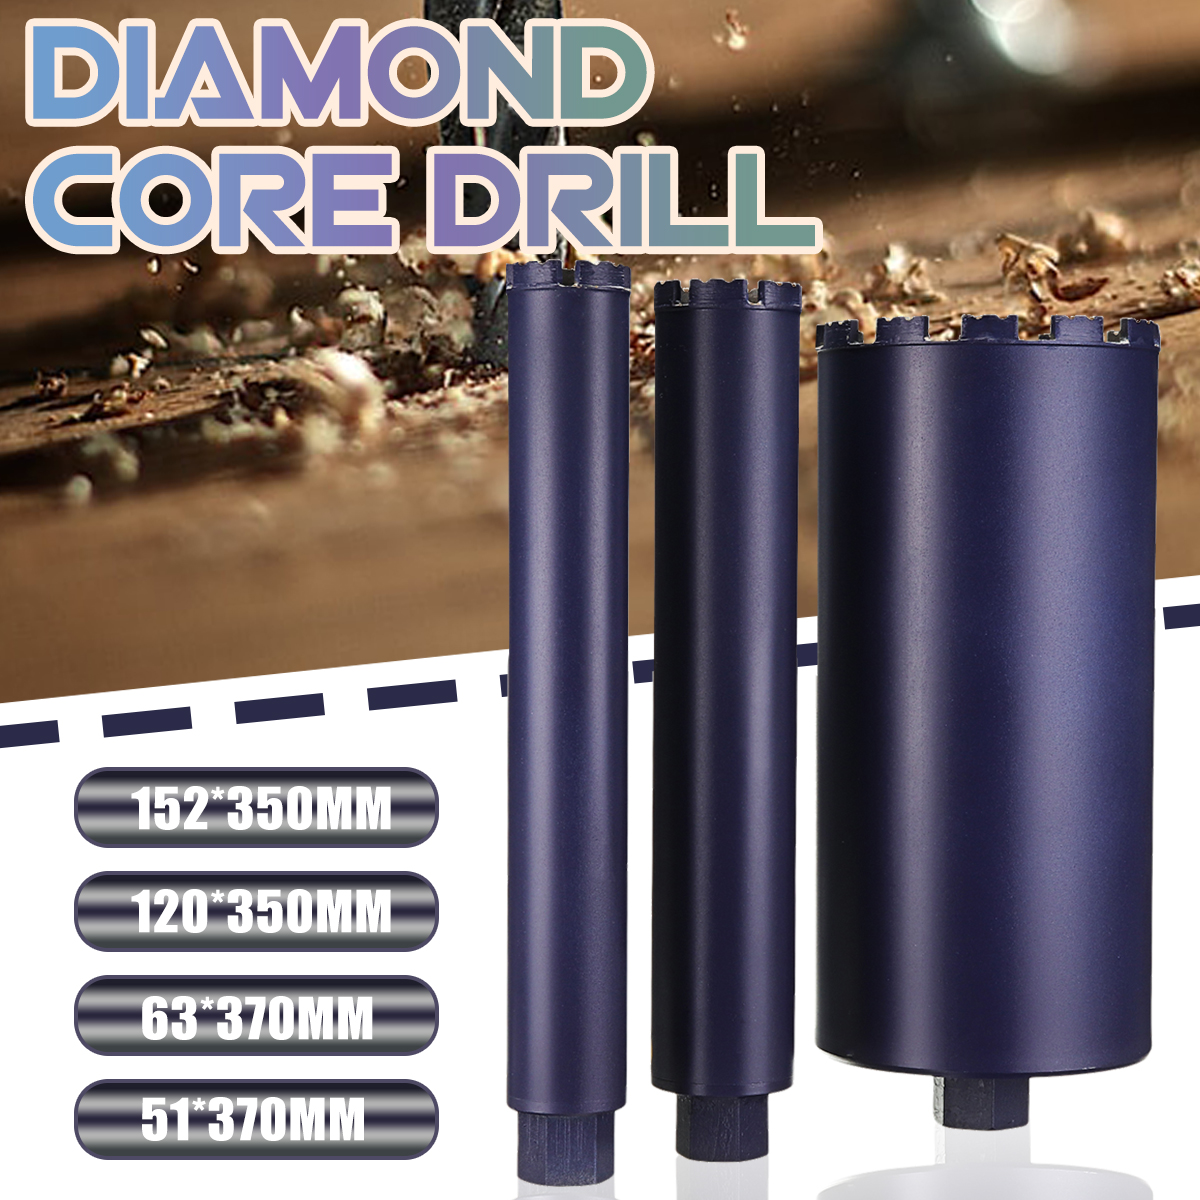 Diamond-Core-Drill-Bits-Masonry-Drilling-Hole-Saw-Cutter-for-Concrete-Stone-Rock-Brick-1601603-1